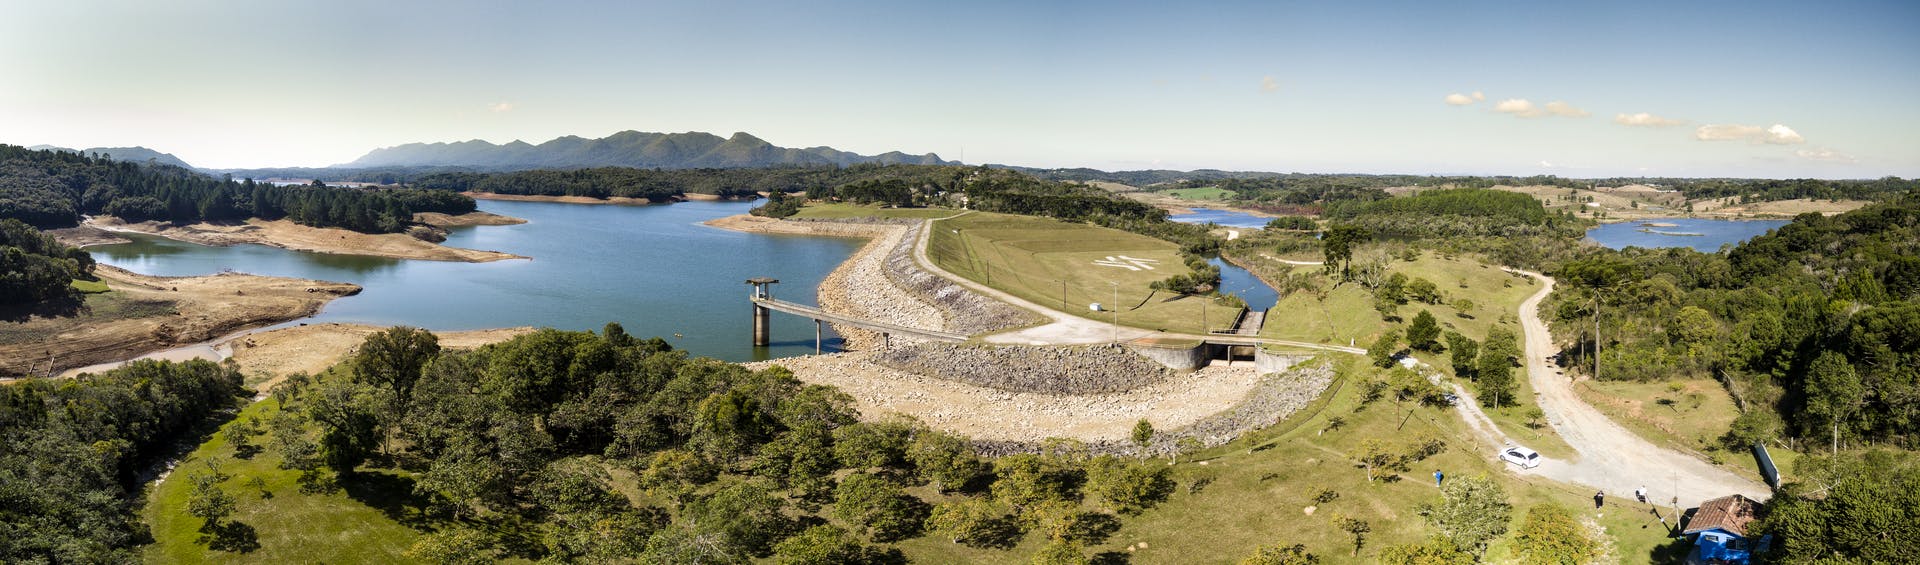 Piraquara 1 Reservoir – Piraquara, Paraná, Brazil